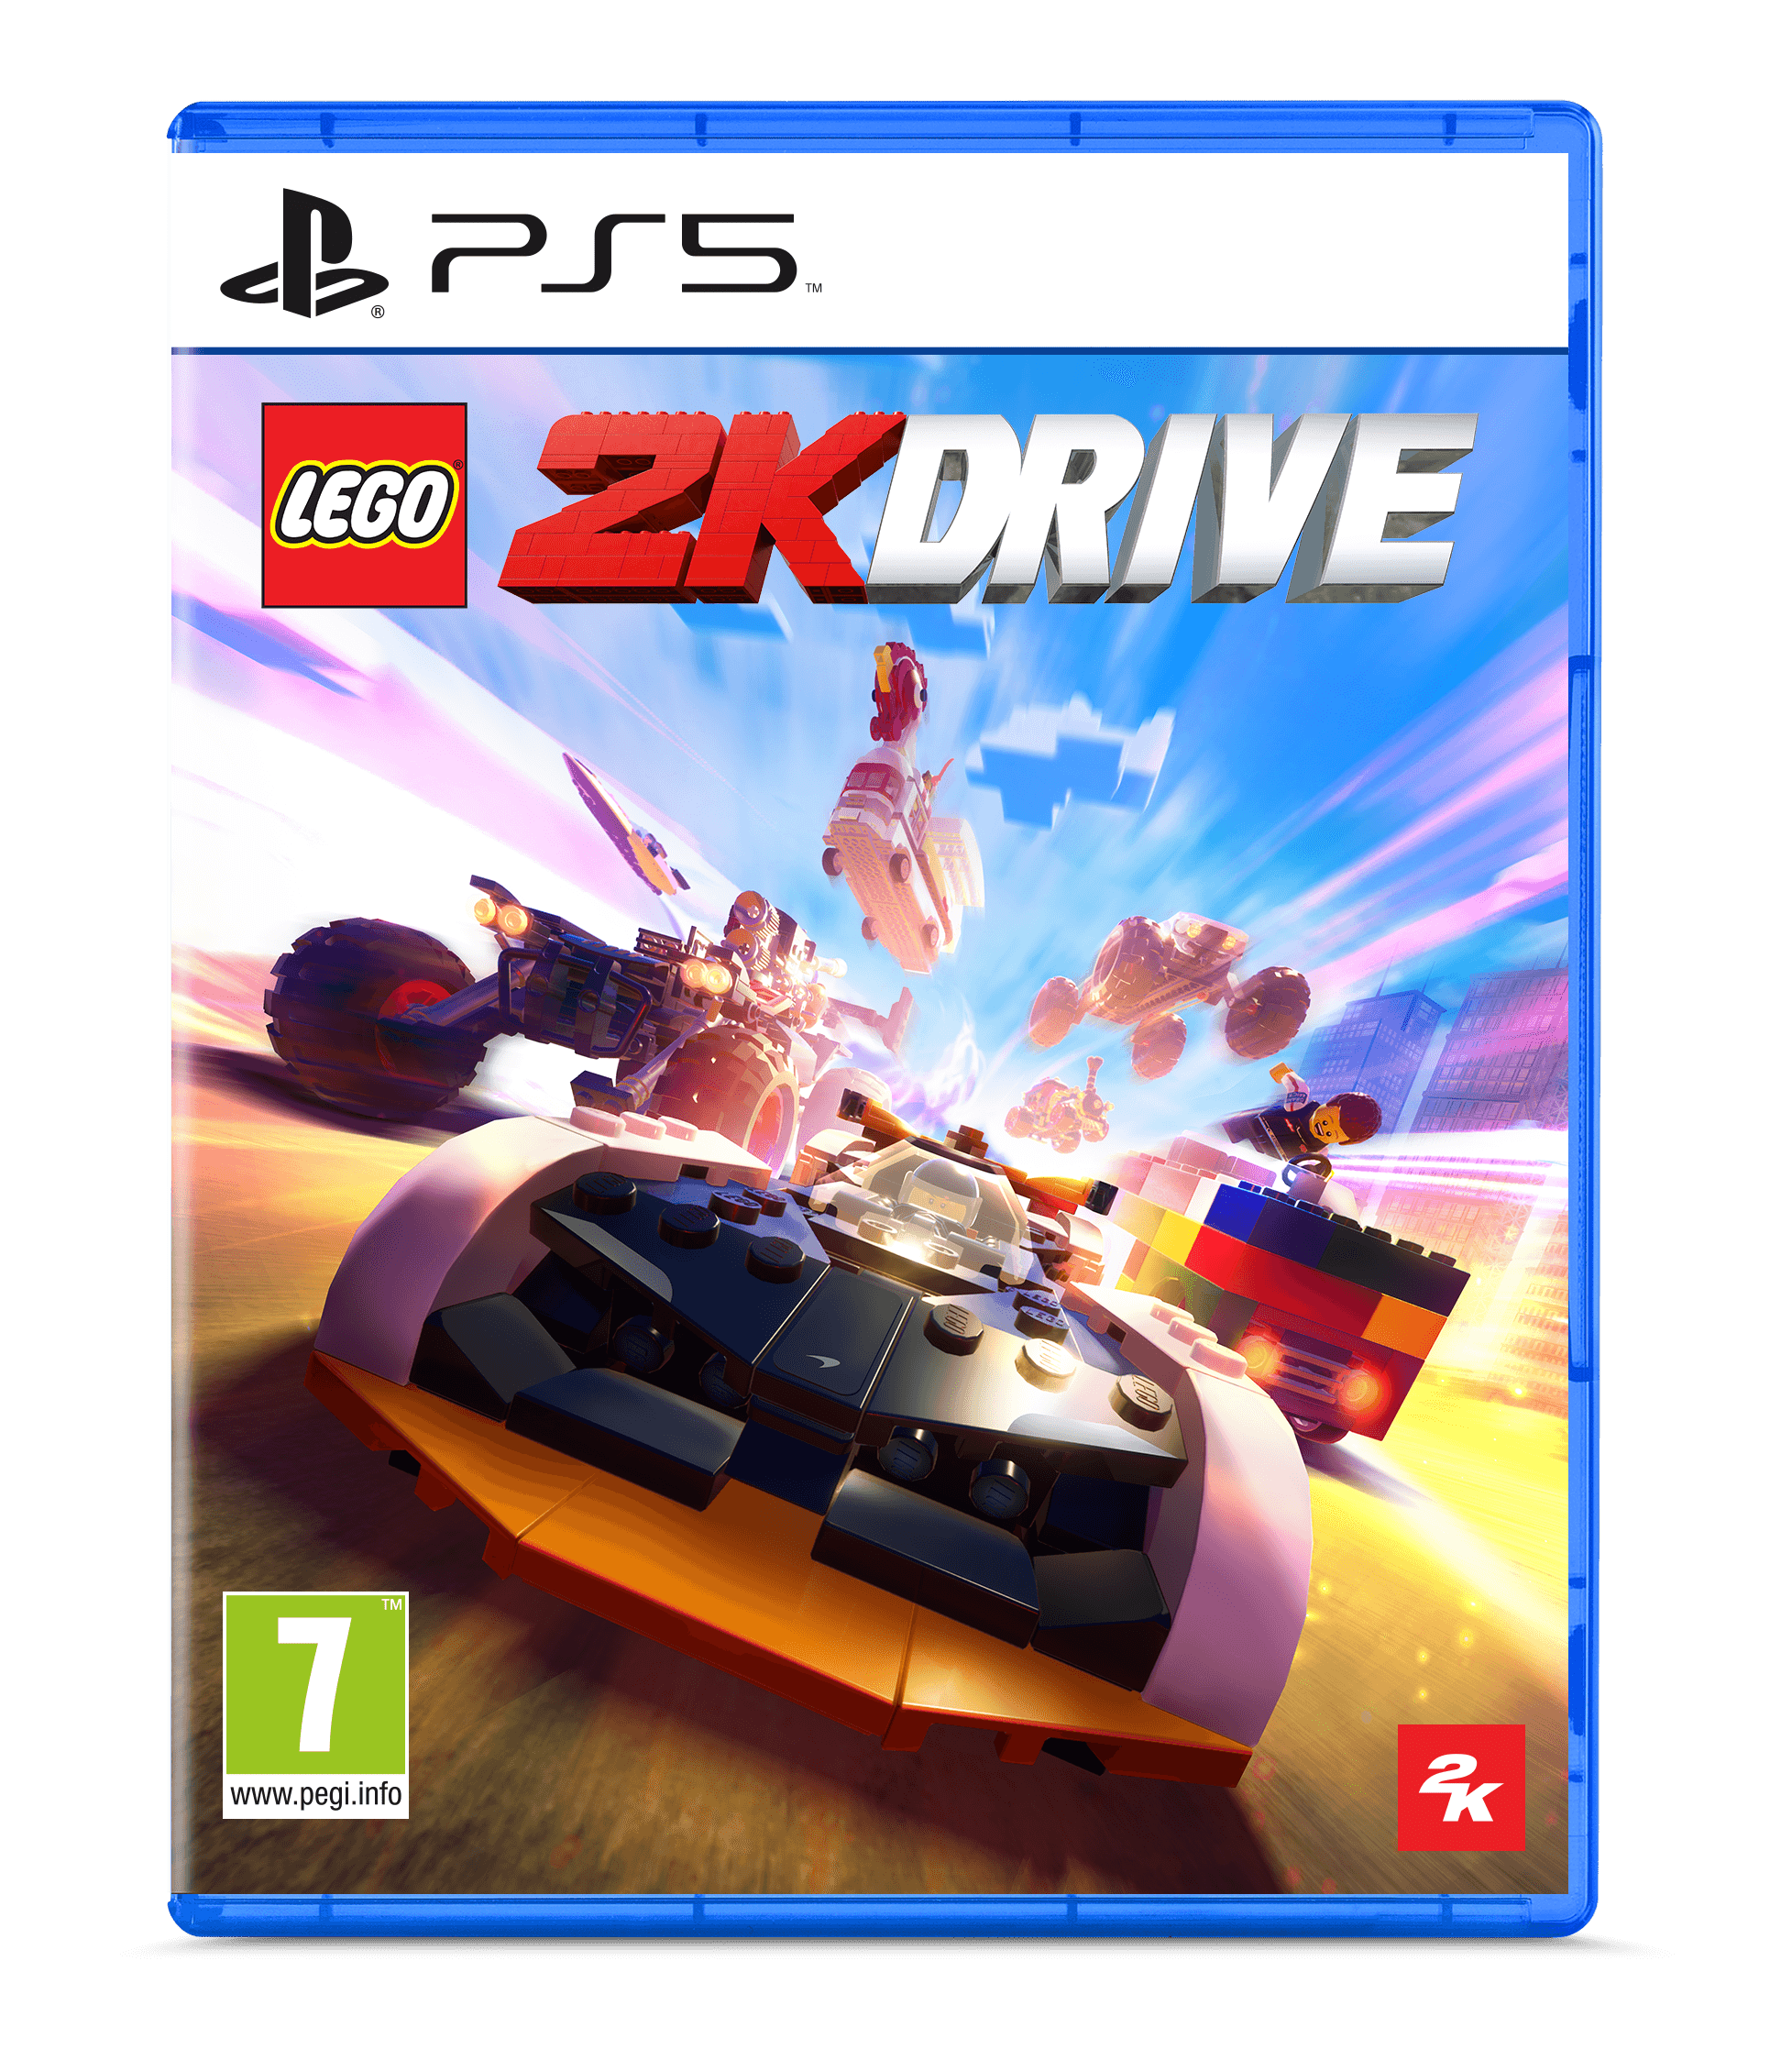 Lego 2K Drive - Want a New Gadget